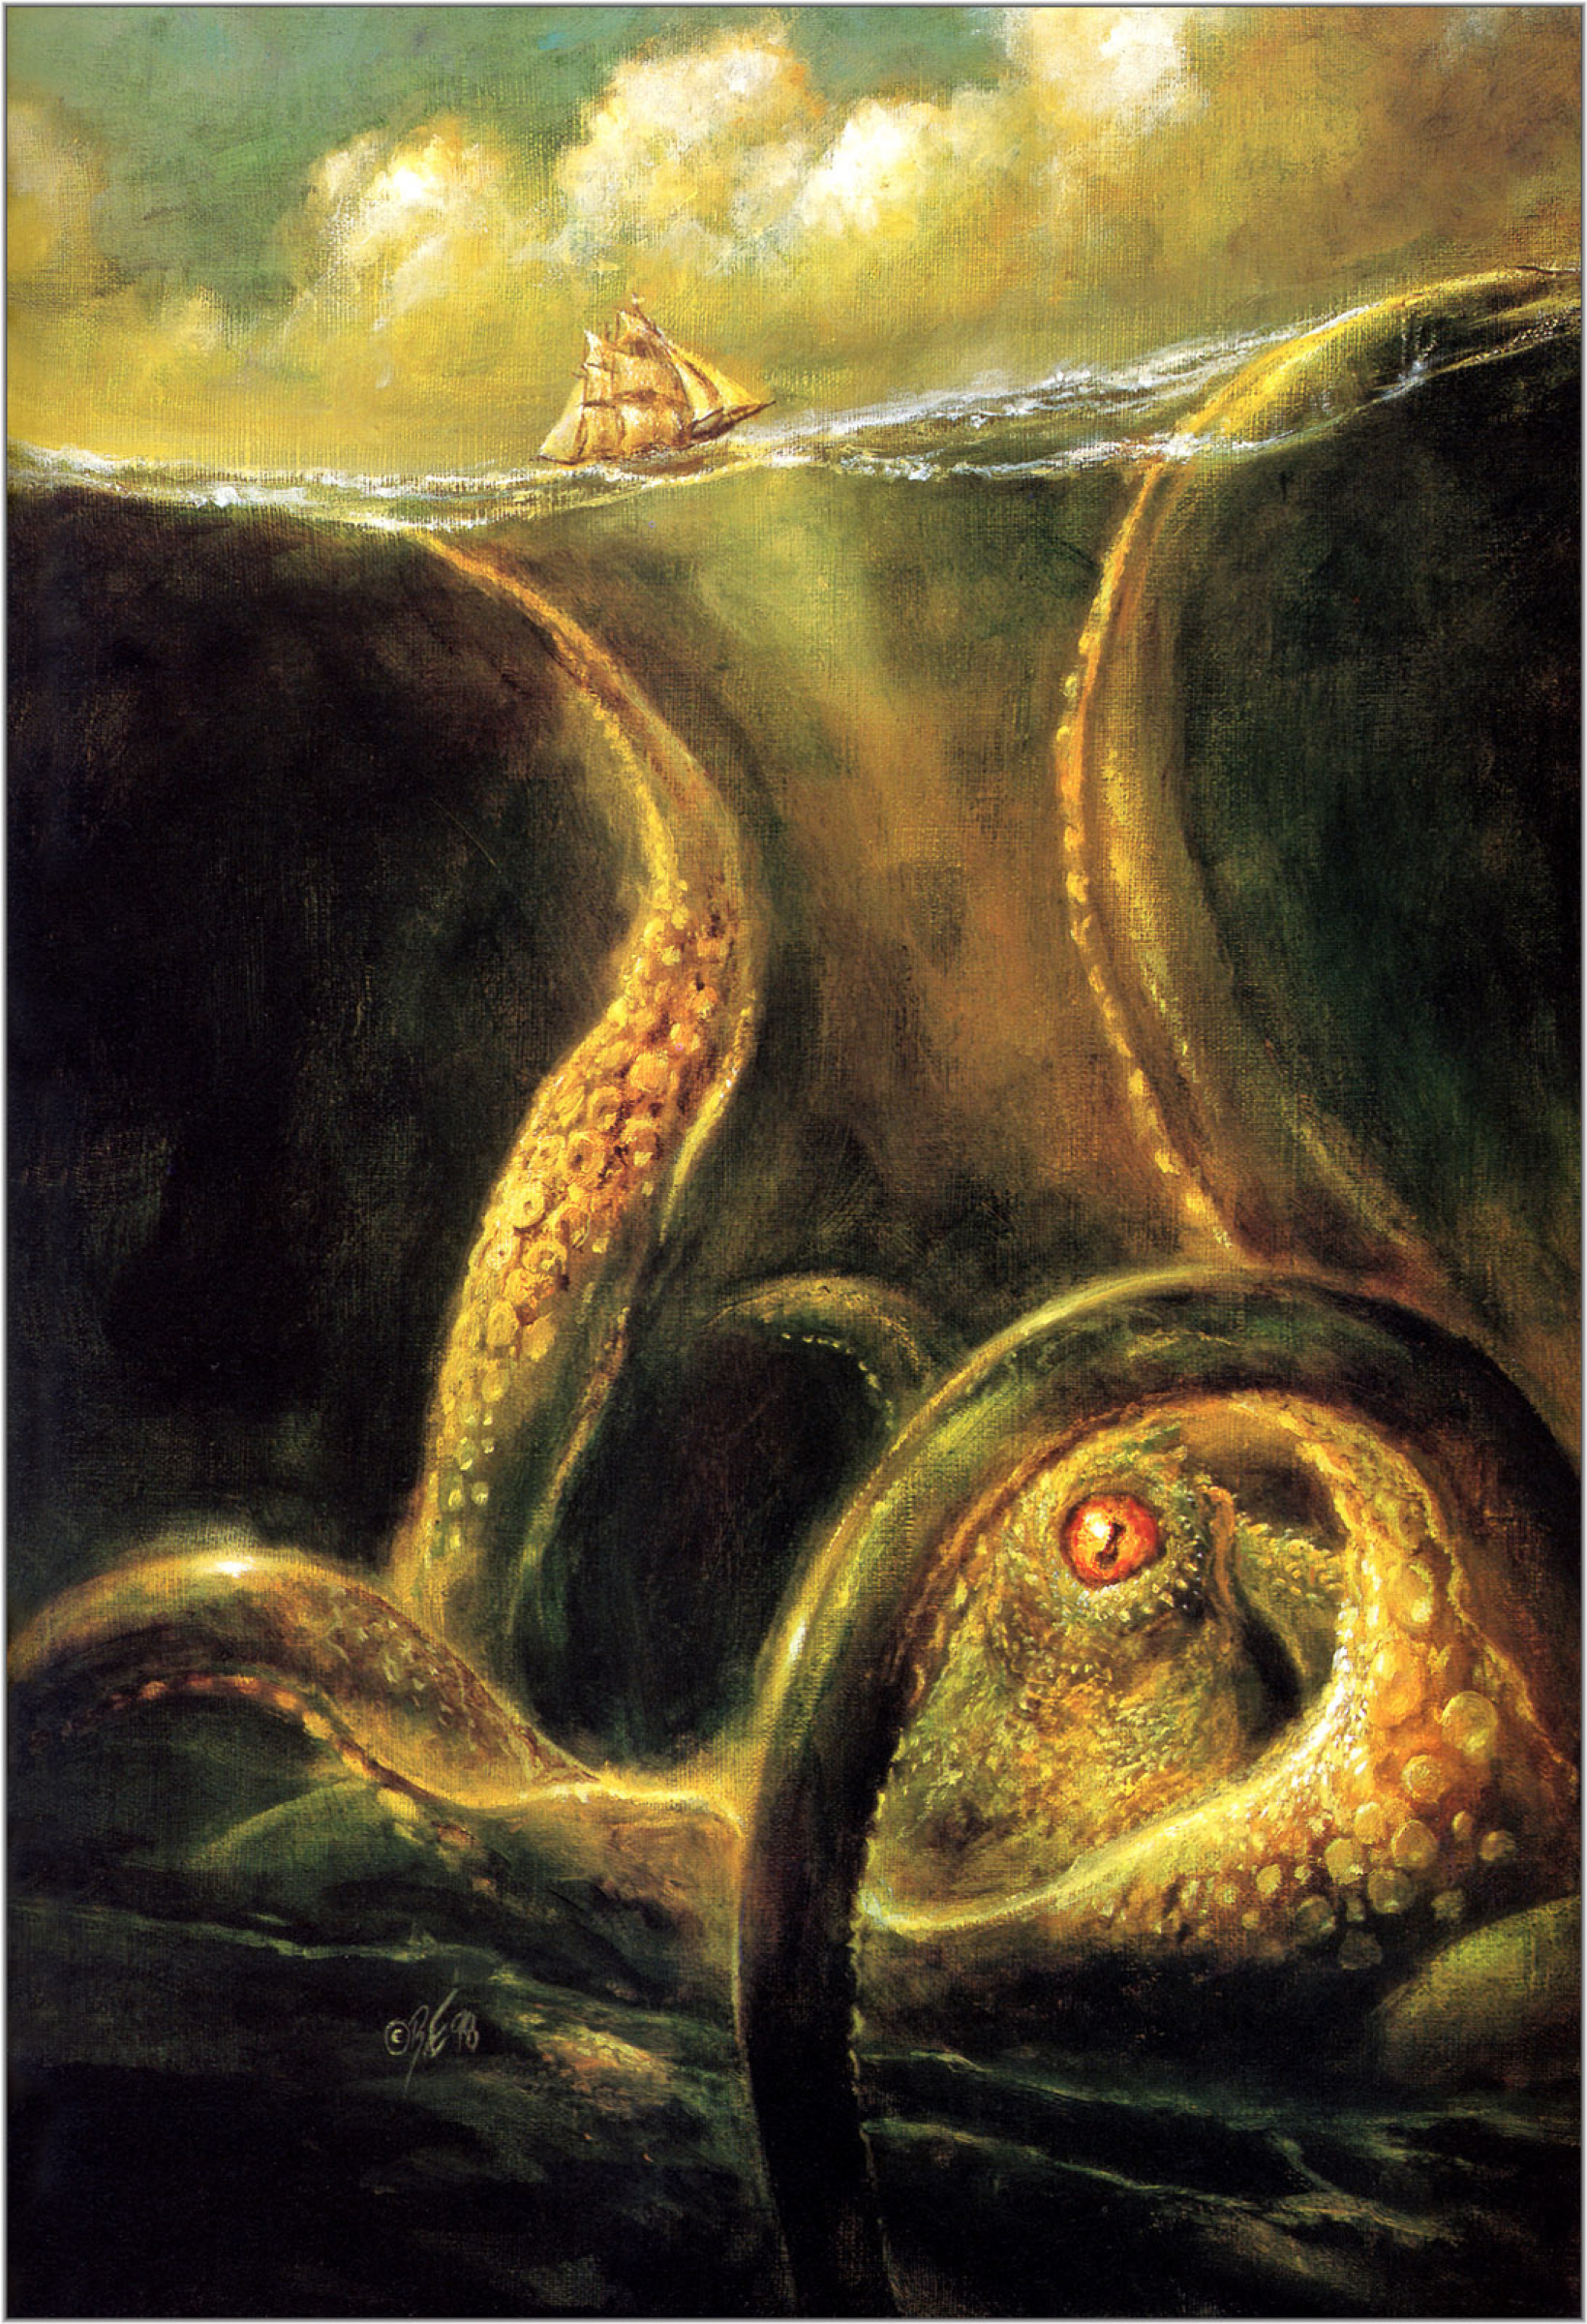 Bob Eggleton The Kraken wakes: Description of the artwork | Arthive